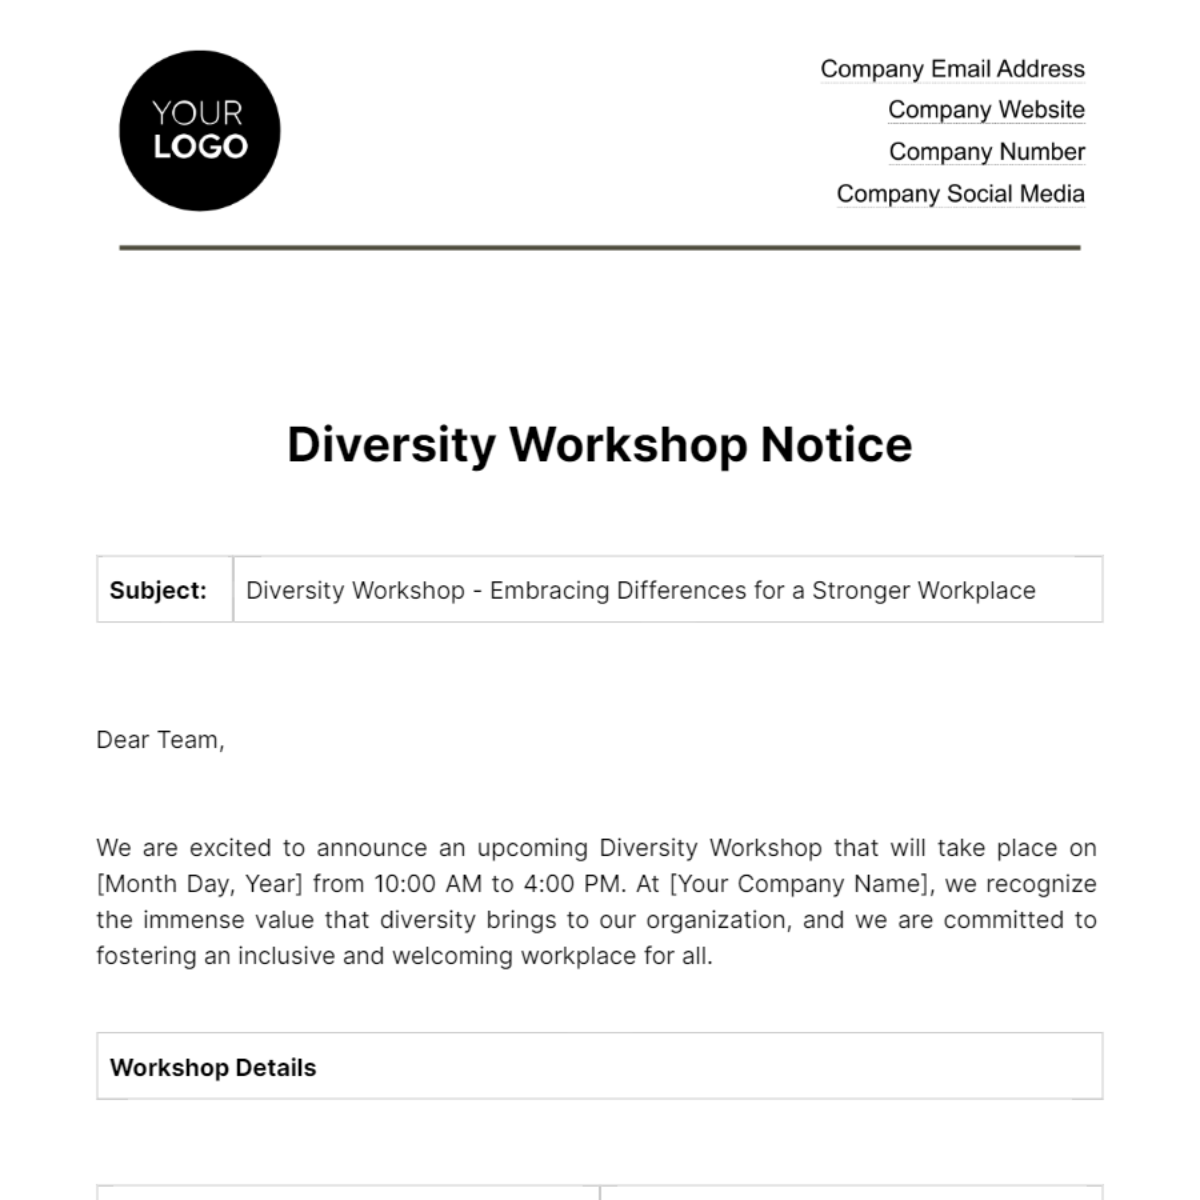 Diversity Workshop Notice HR Template